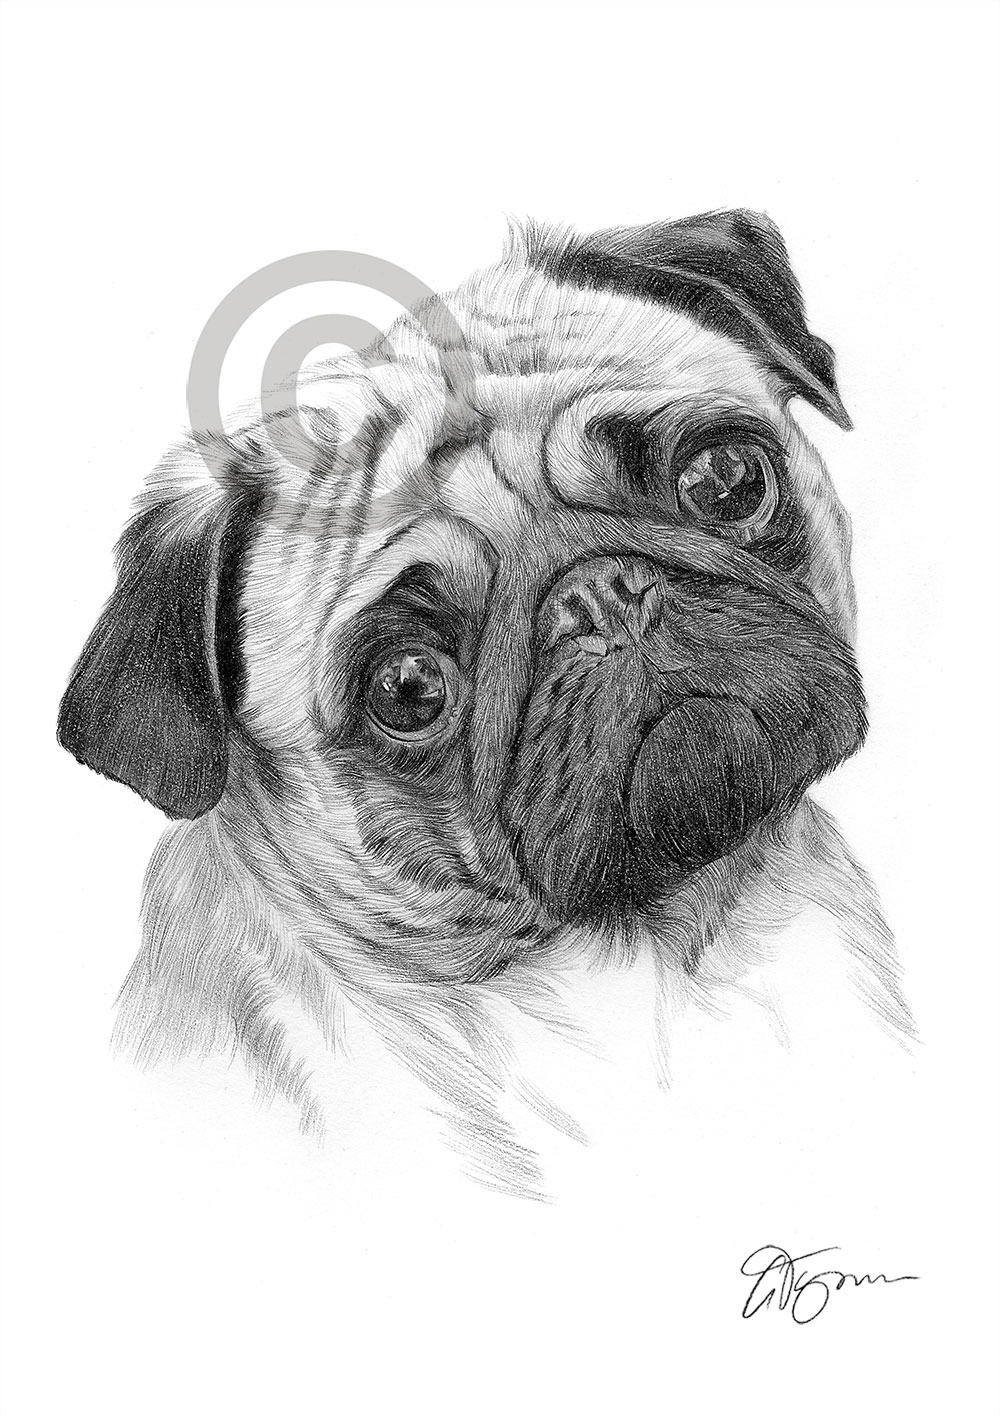 Pencil drawing of a Pug by artist Gary Tymon